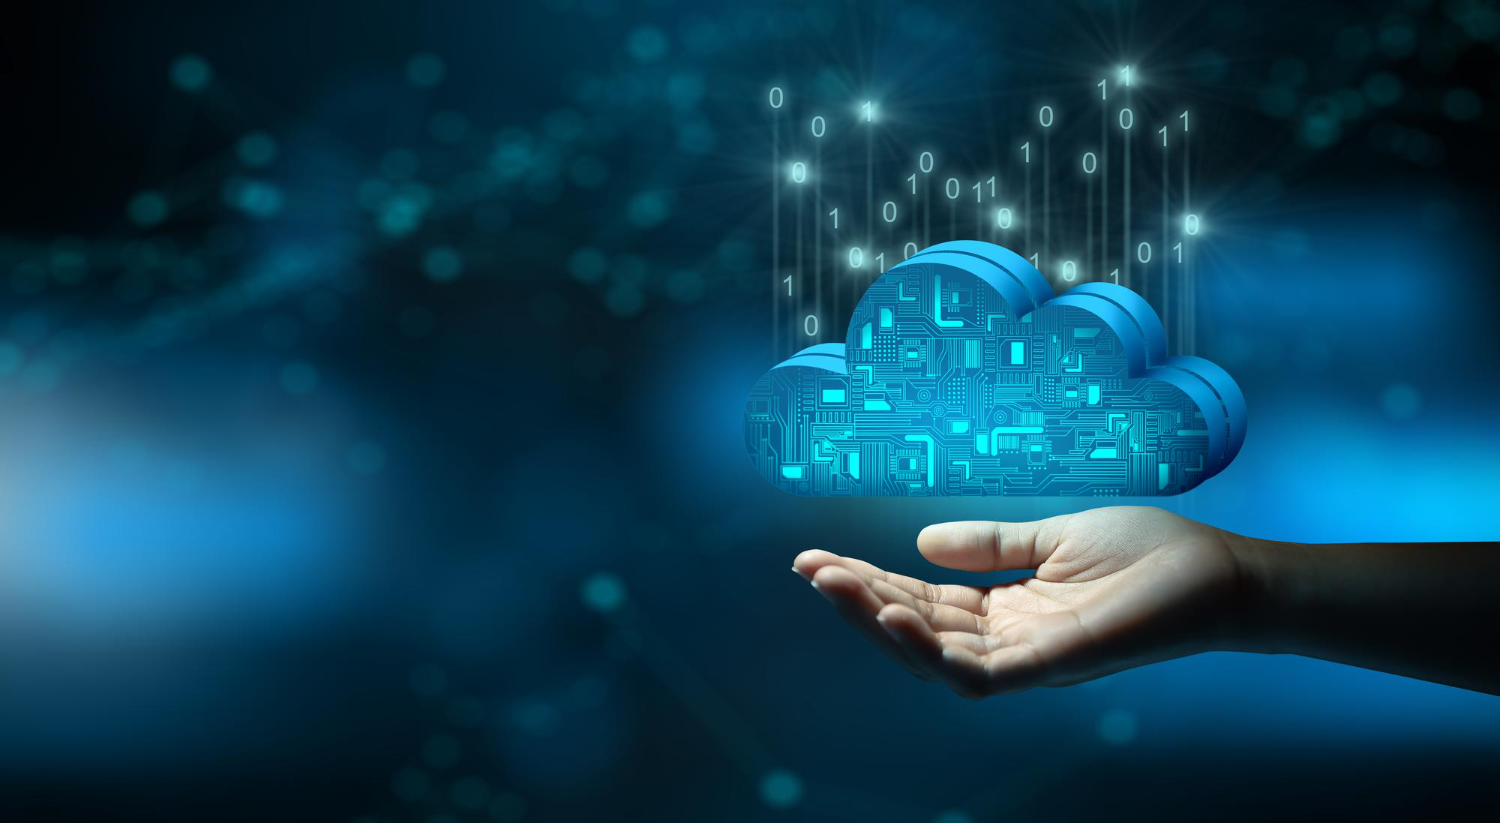 businessman-hand-holding-cloud-computing-technology-internet-storage-network-cloud-service-cloud-technology-cloud-storage-concept